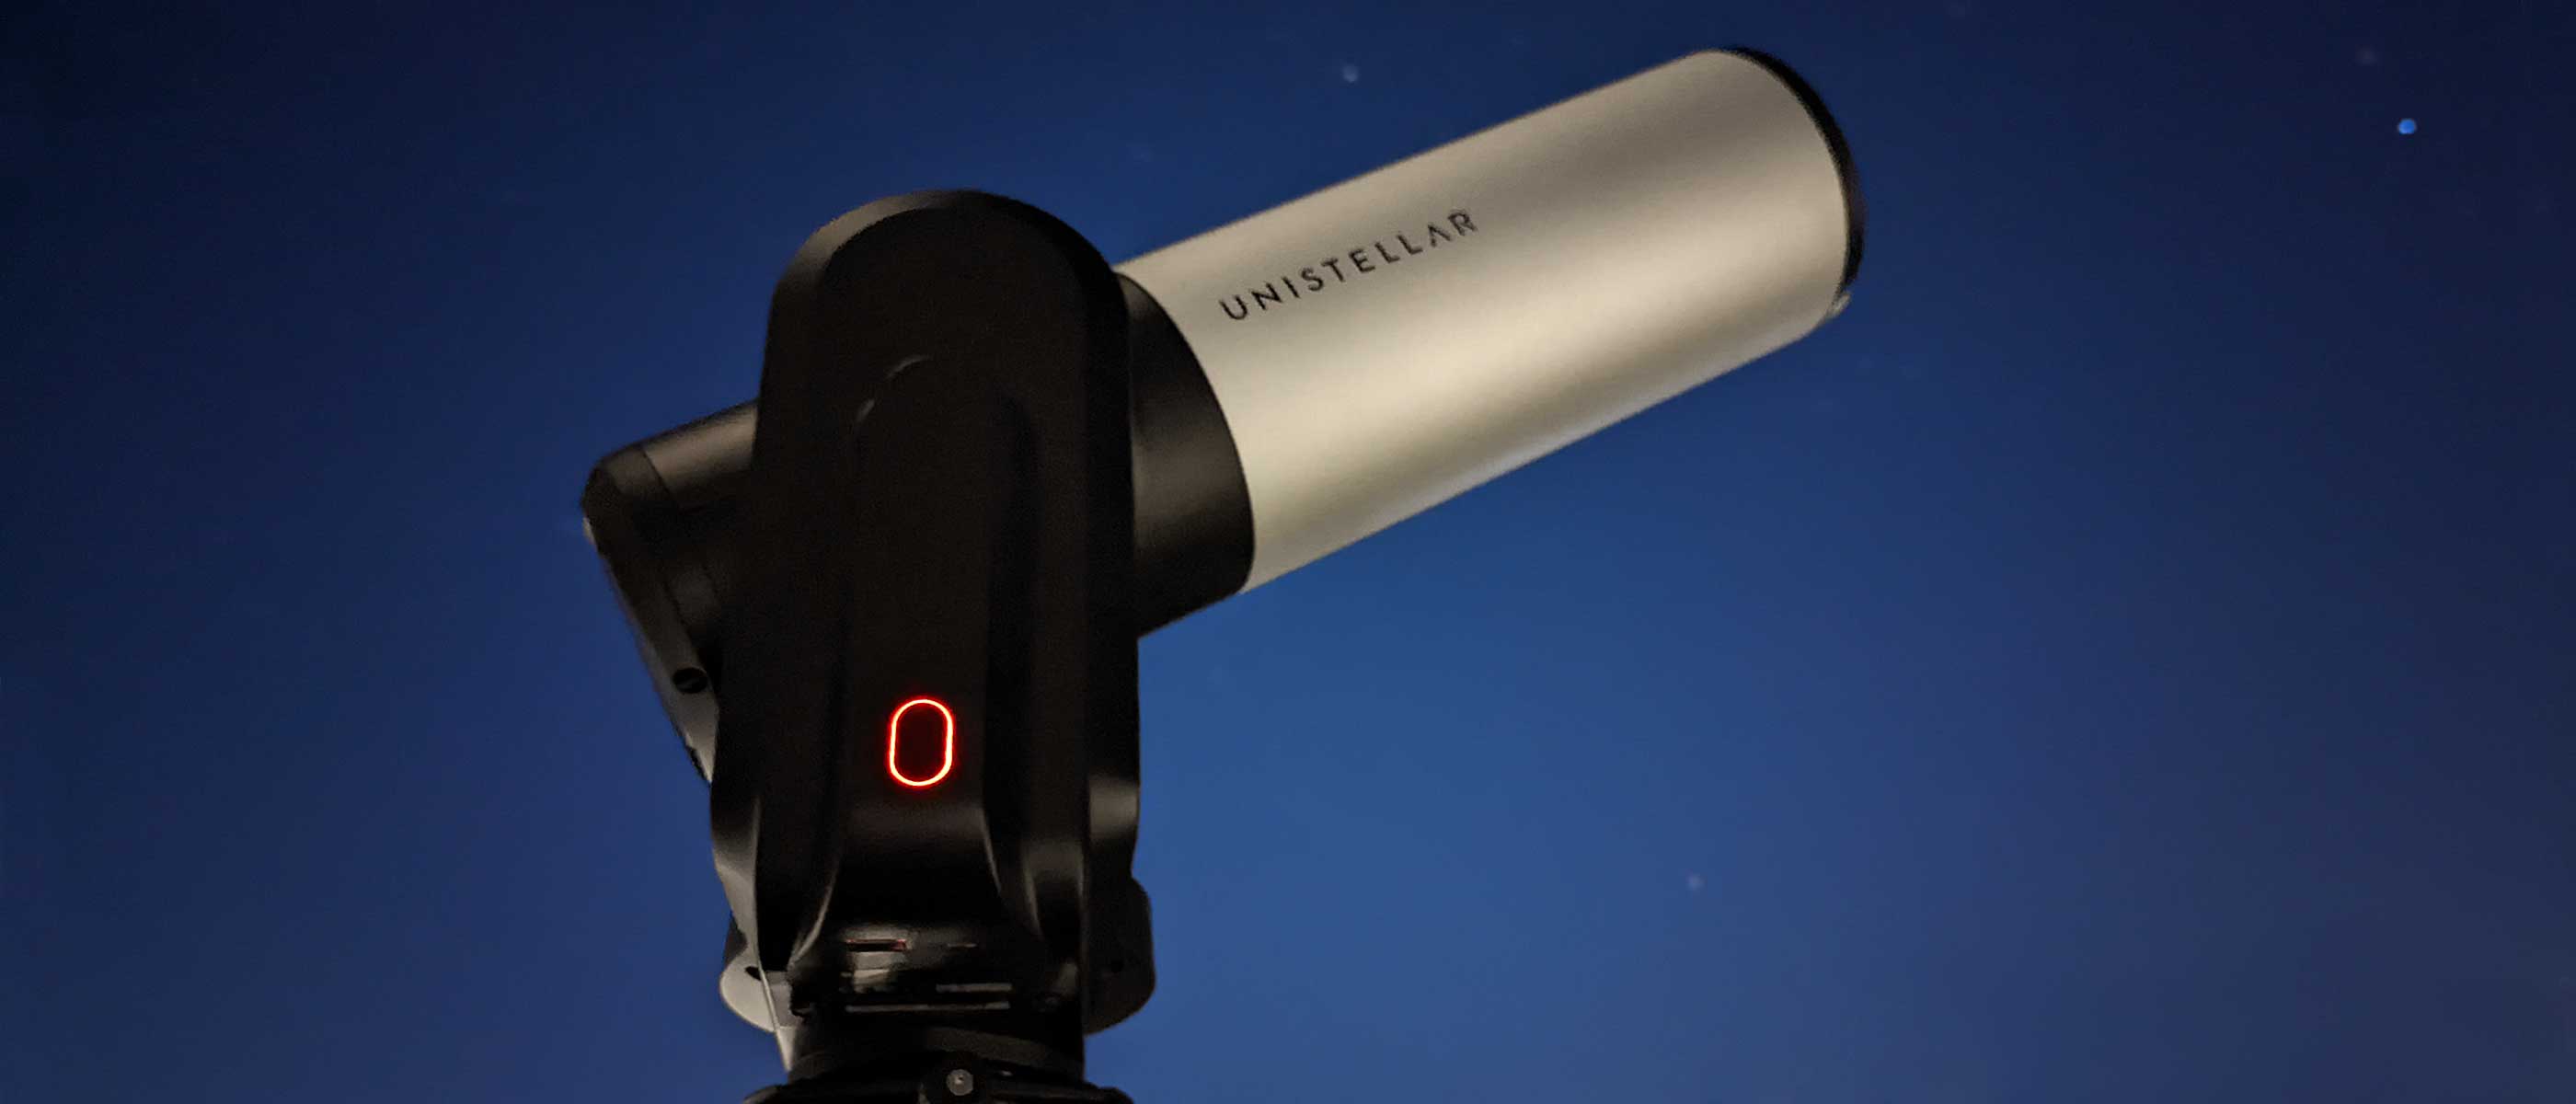  Unistellar eVscope 2 telescope review 